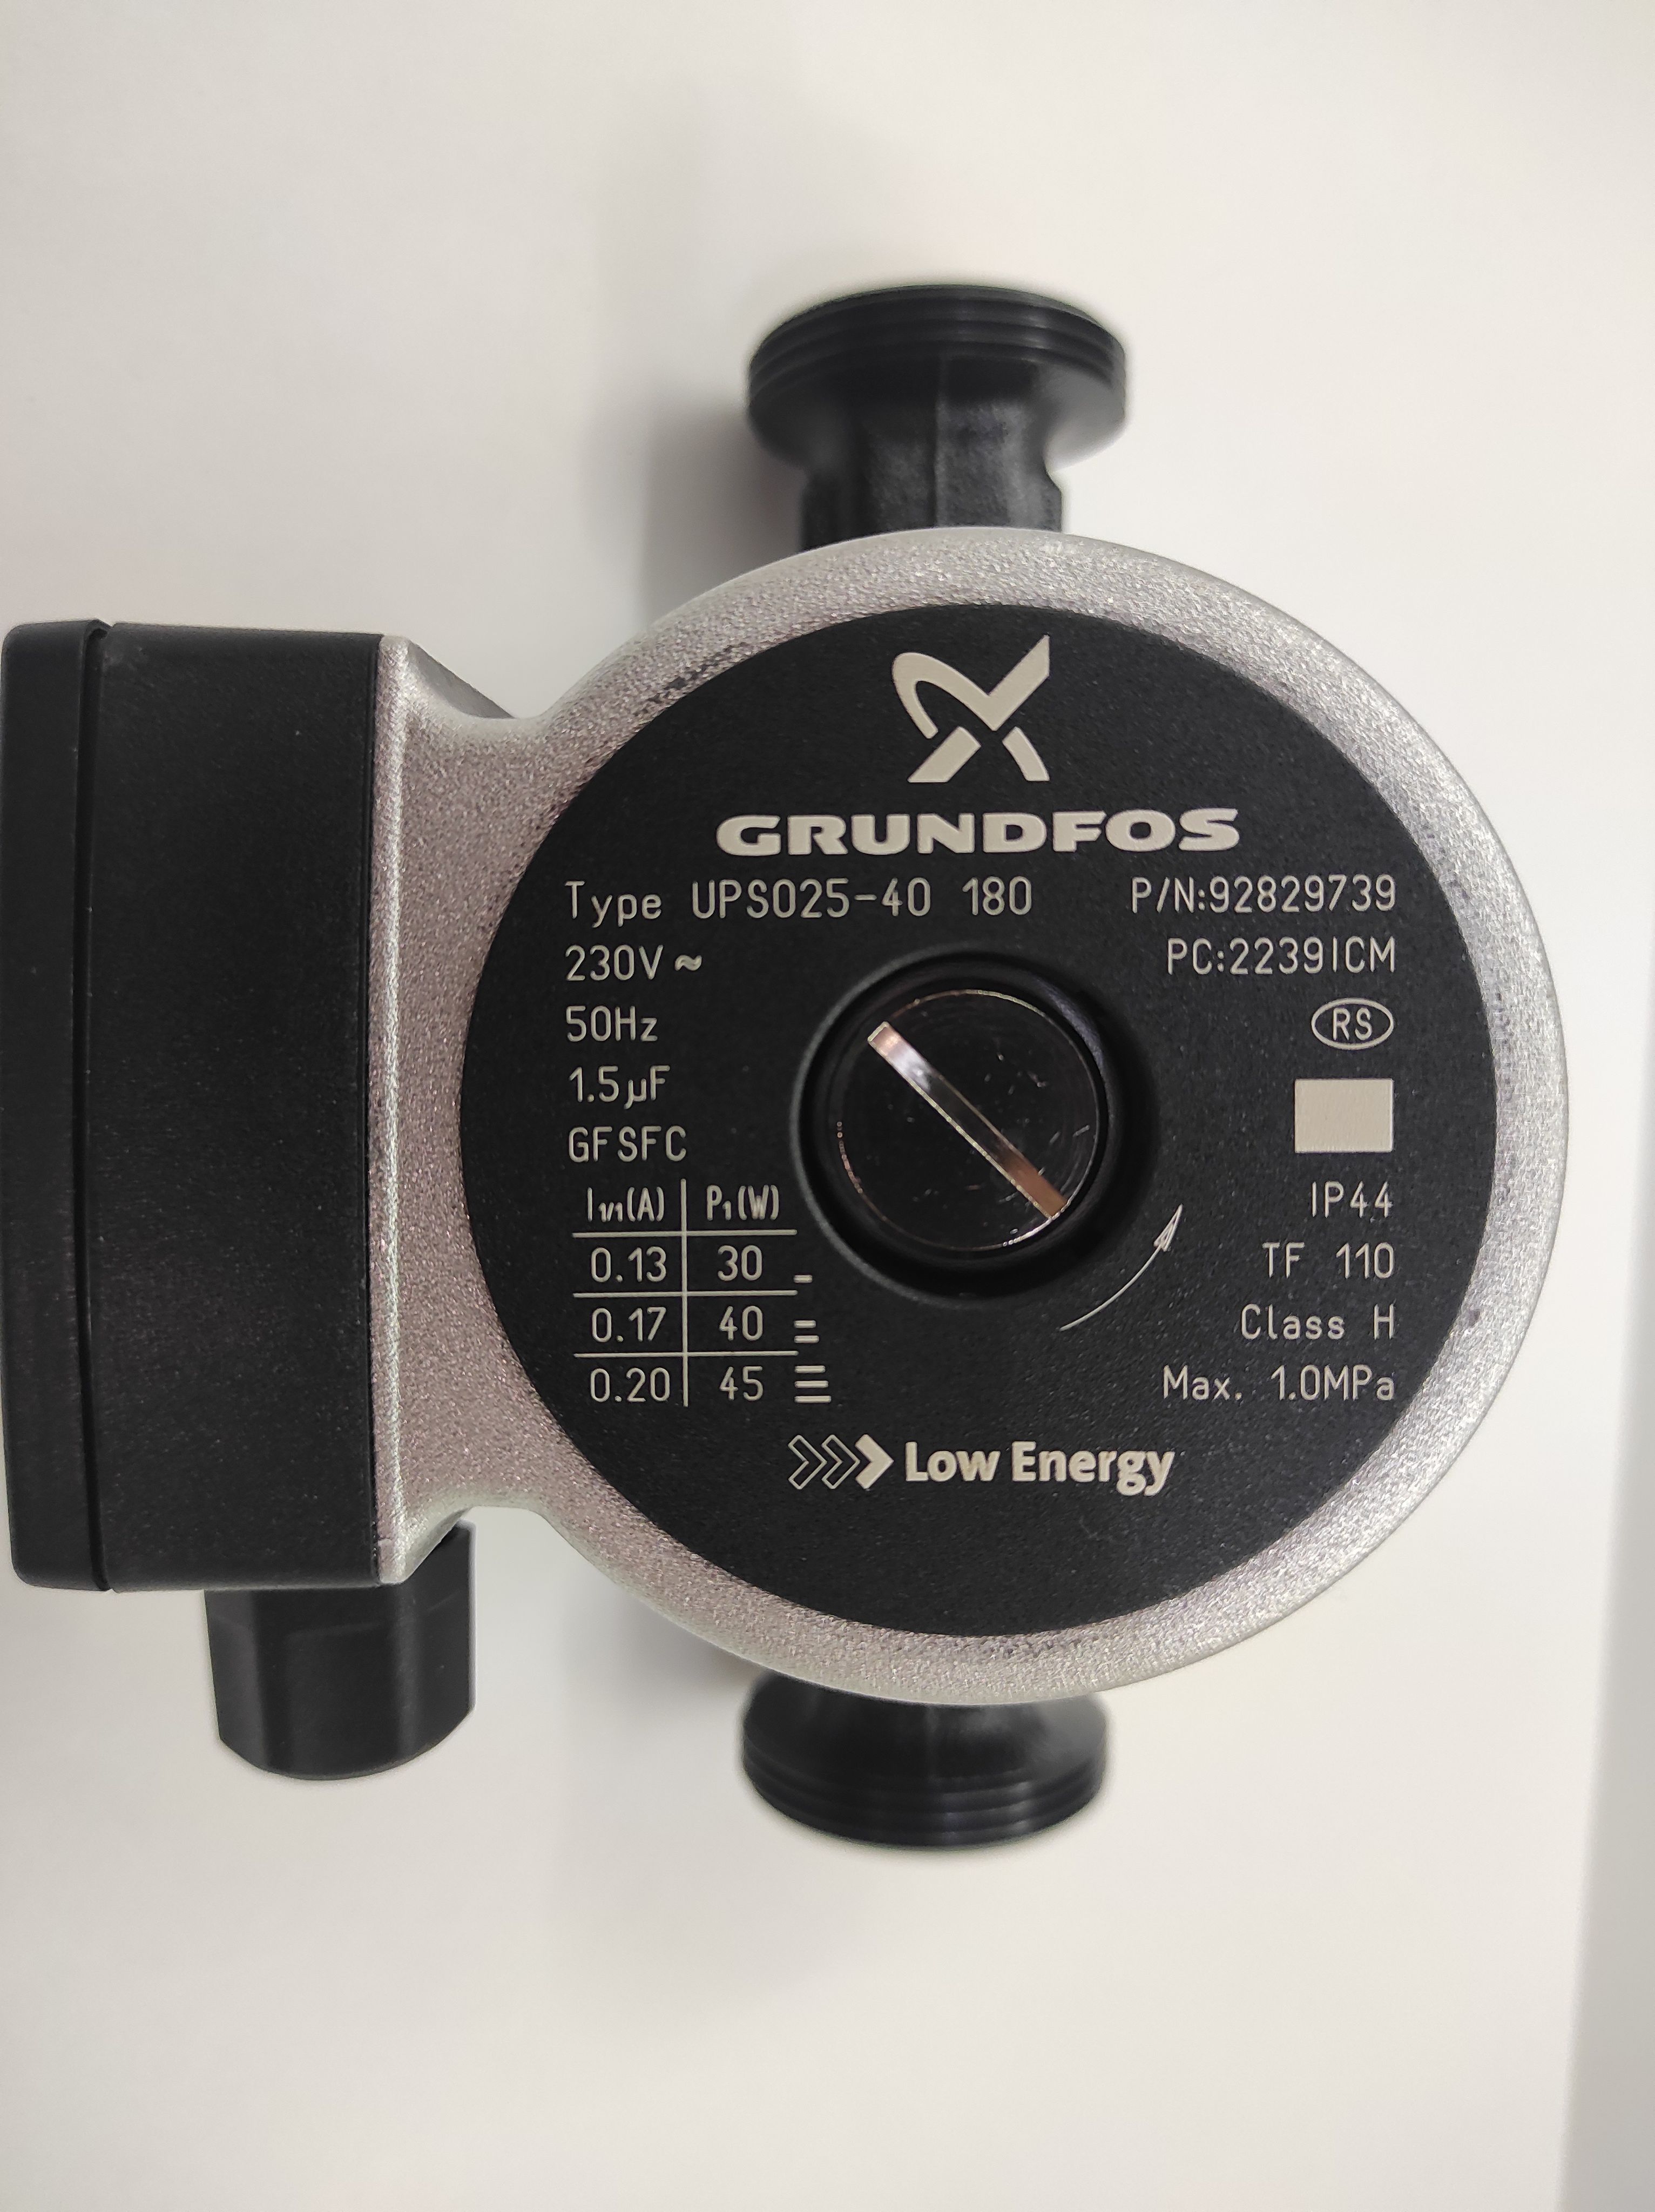 Grundfos ups 25-40 180мм -. Насос циркуляционный Grundfos ups 25-40. Ups 25-40 180 насос для котла 1x 230v50нz. Grundfos 25-40 180 характеристики.